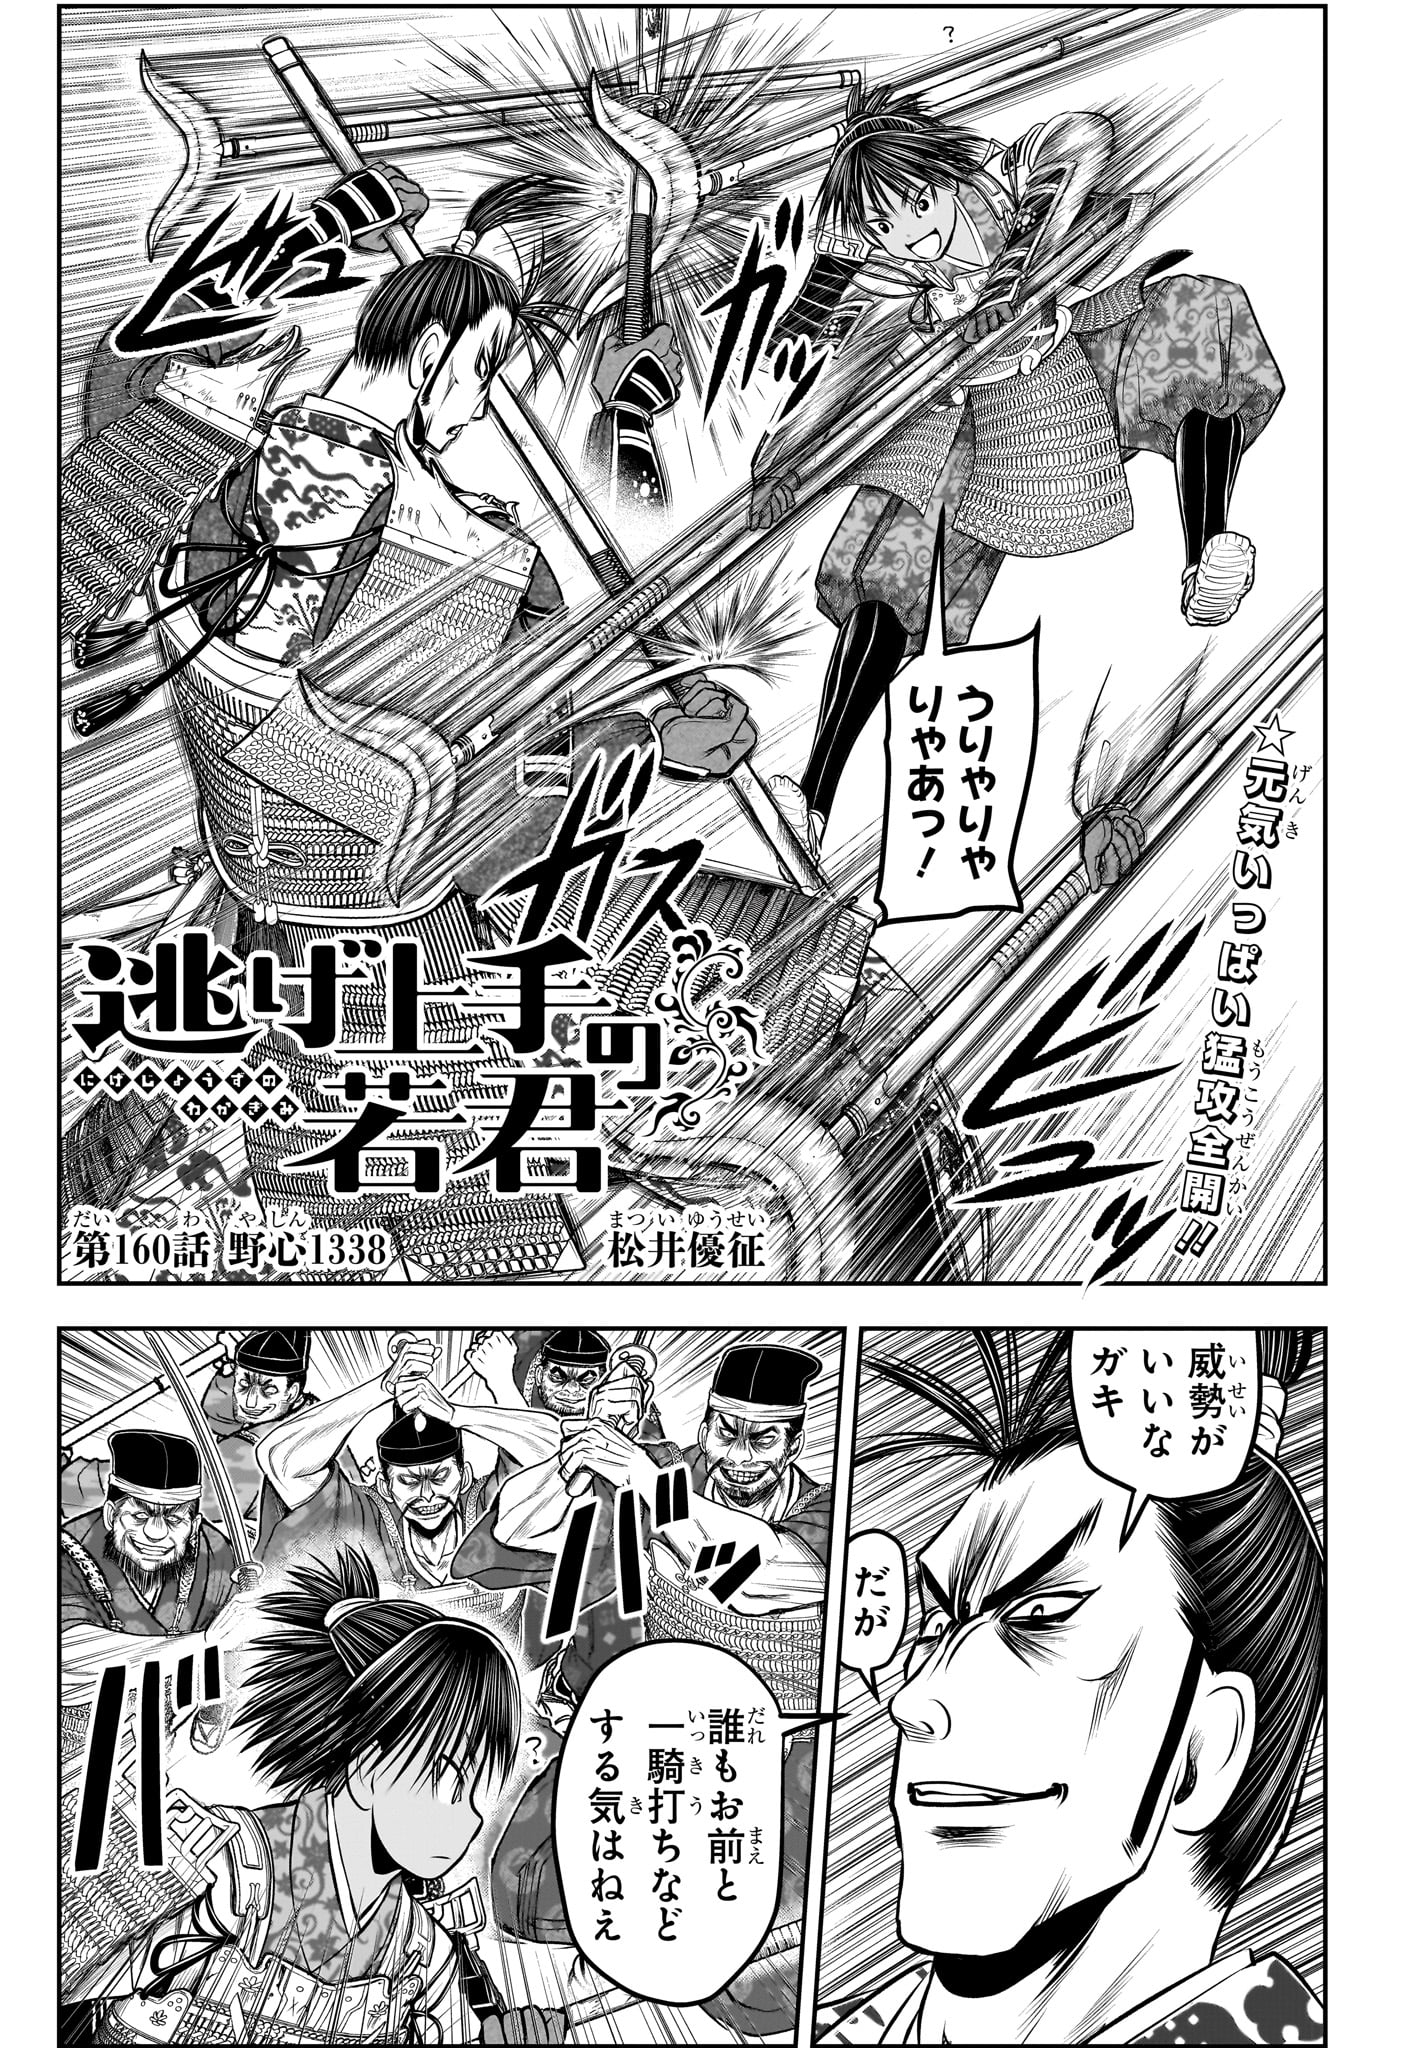 Nige Jouzu no Wakagimi - Chapter 160 - Page 1